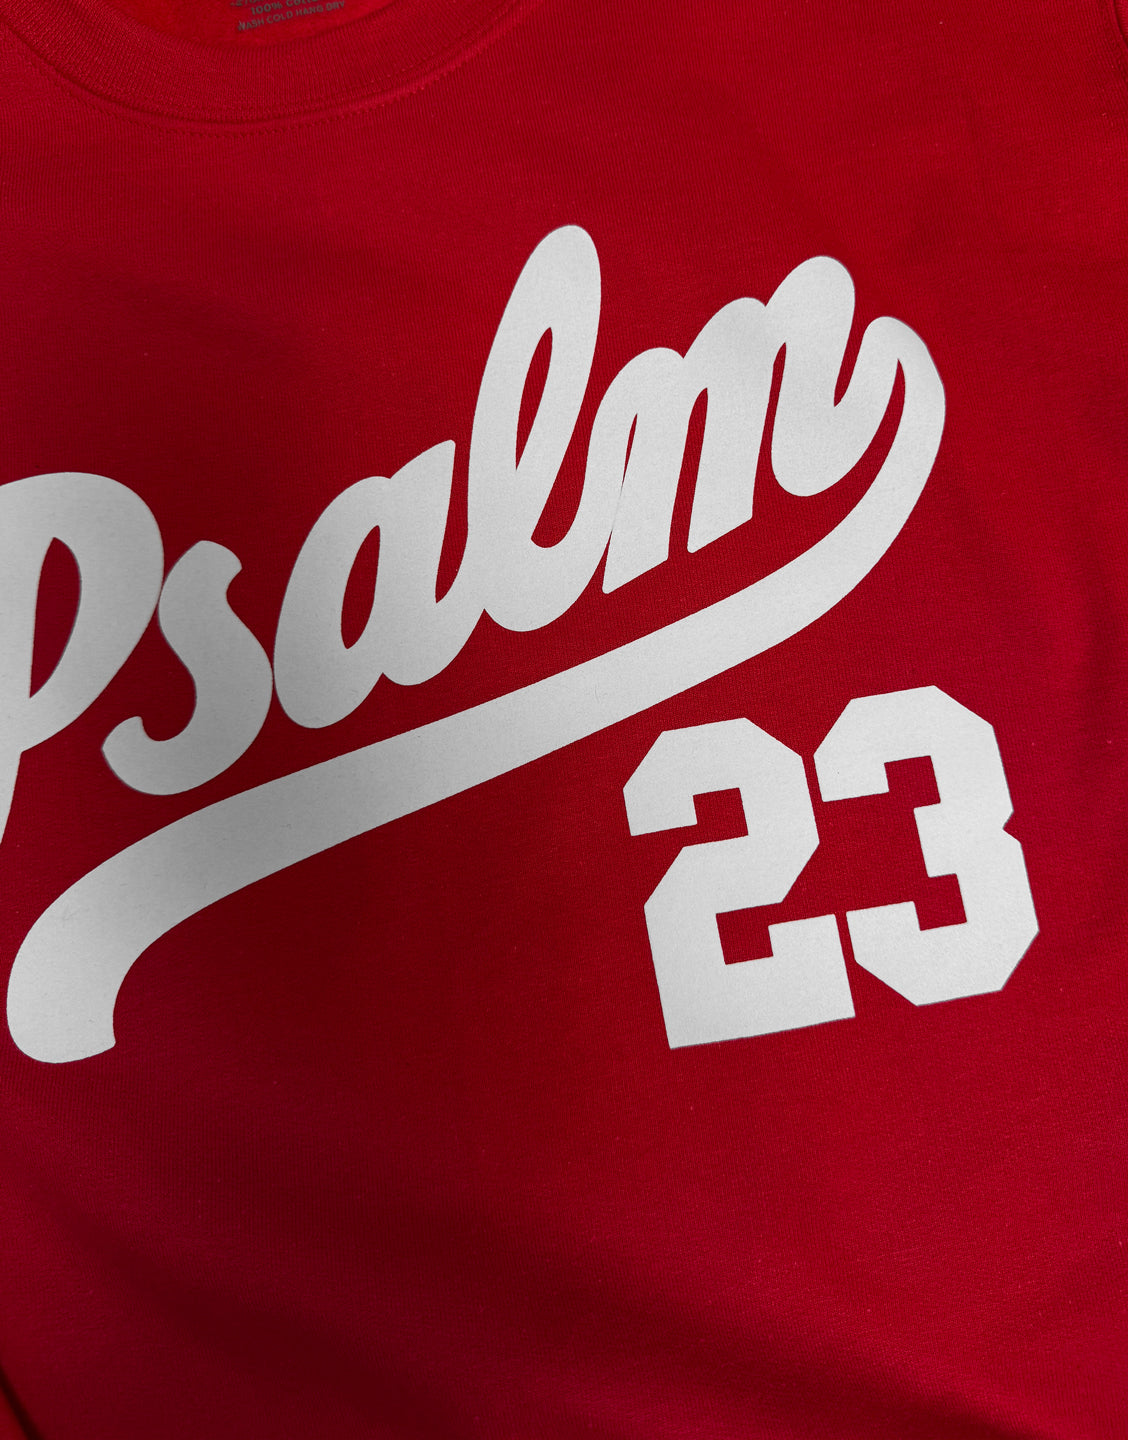 Psalm 23 Sweatshirt - Red